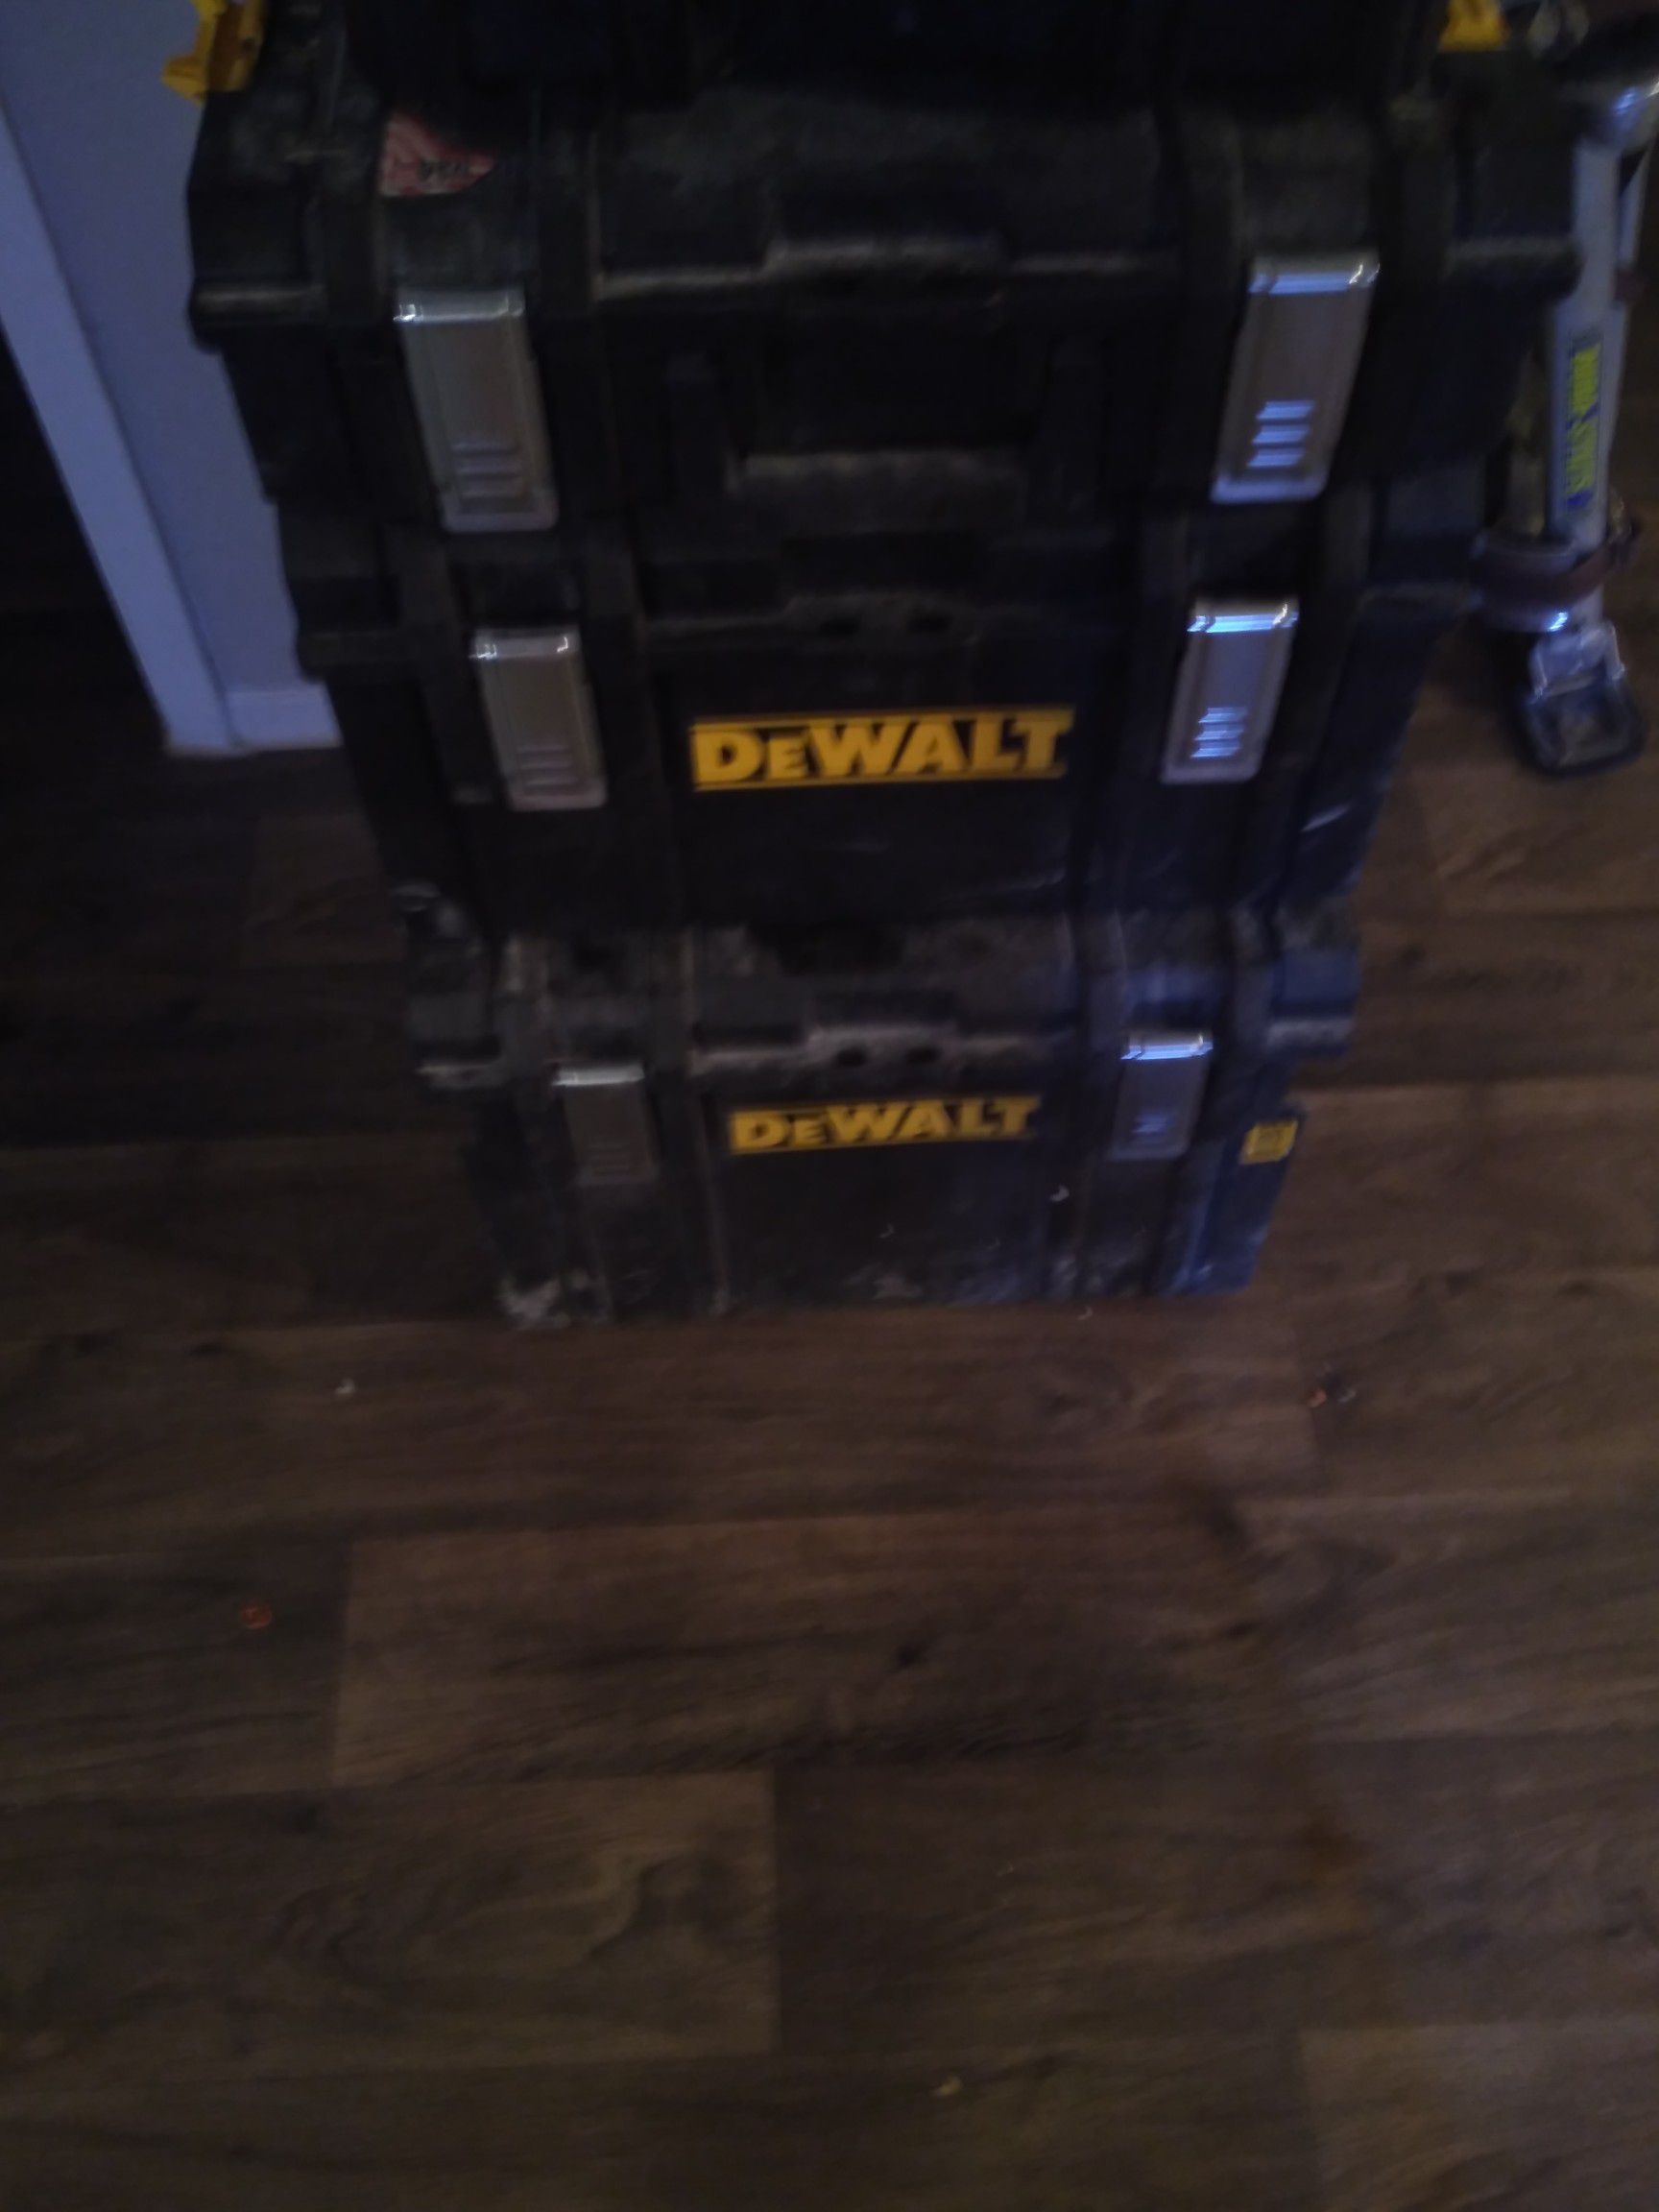 DeWalt box